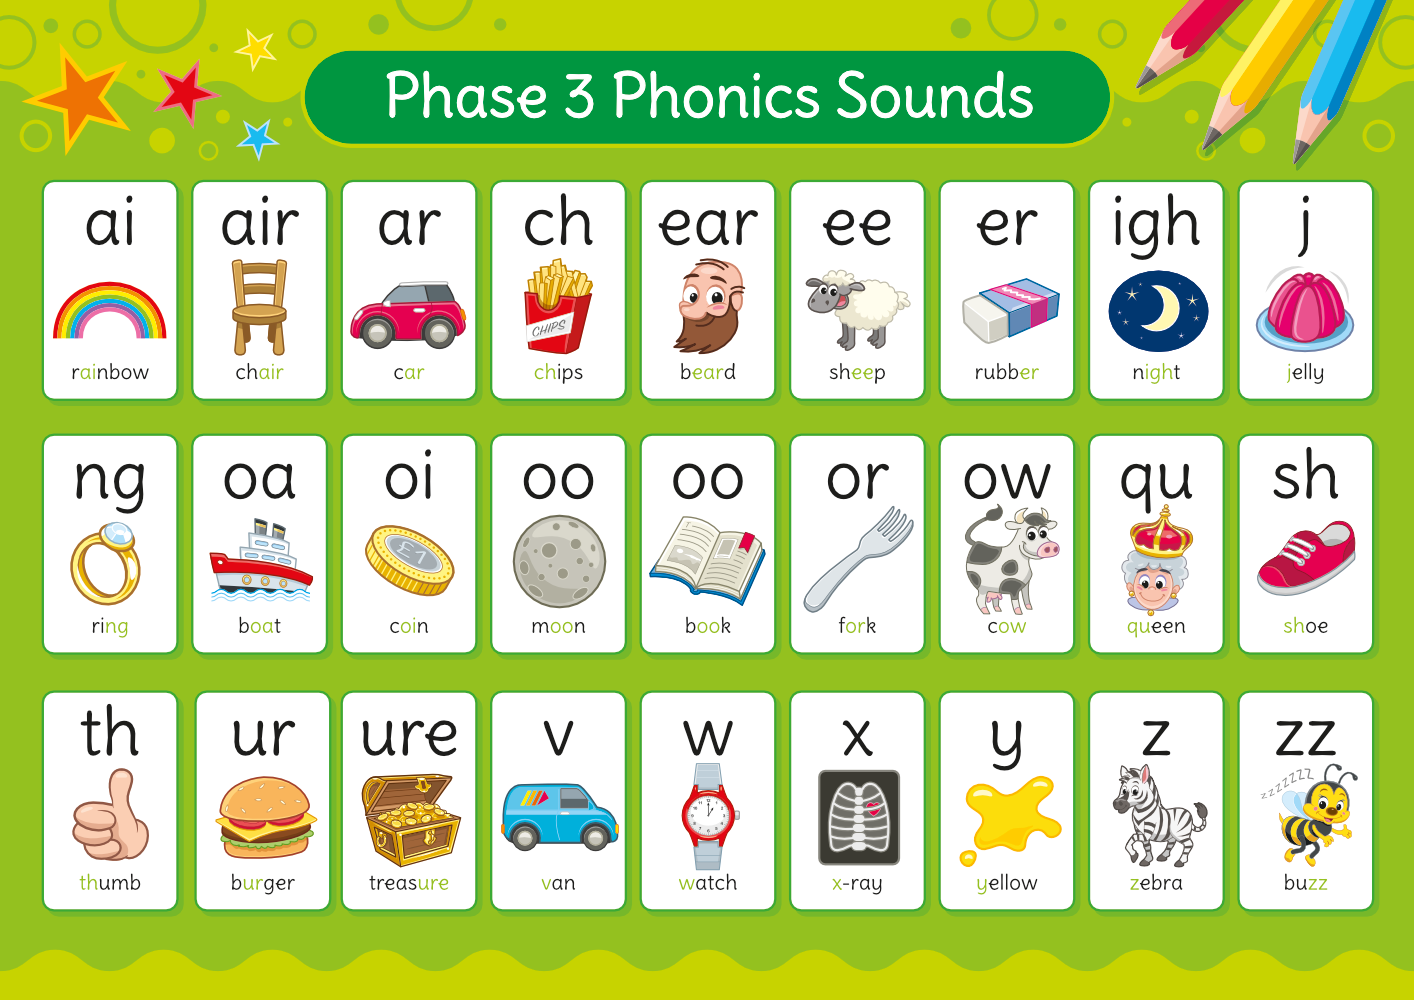 Share sounds. Phonics. Phase 3 Phonics. Phonic Sounds. Phase 2 Phonics Sounds.